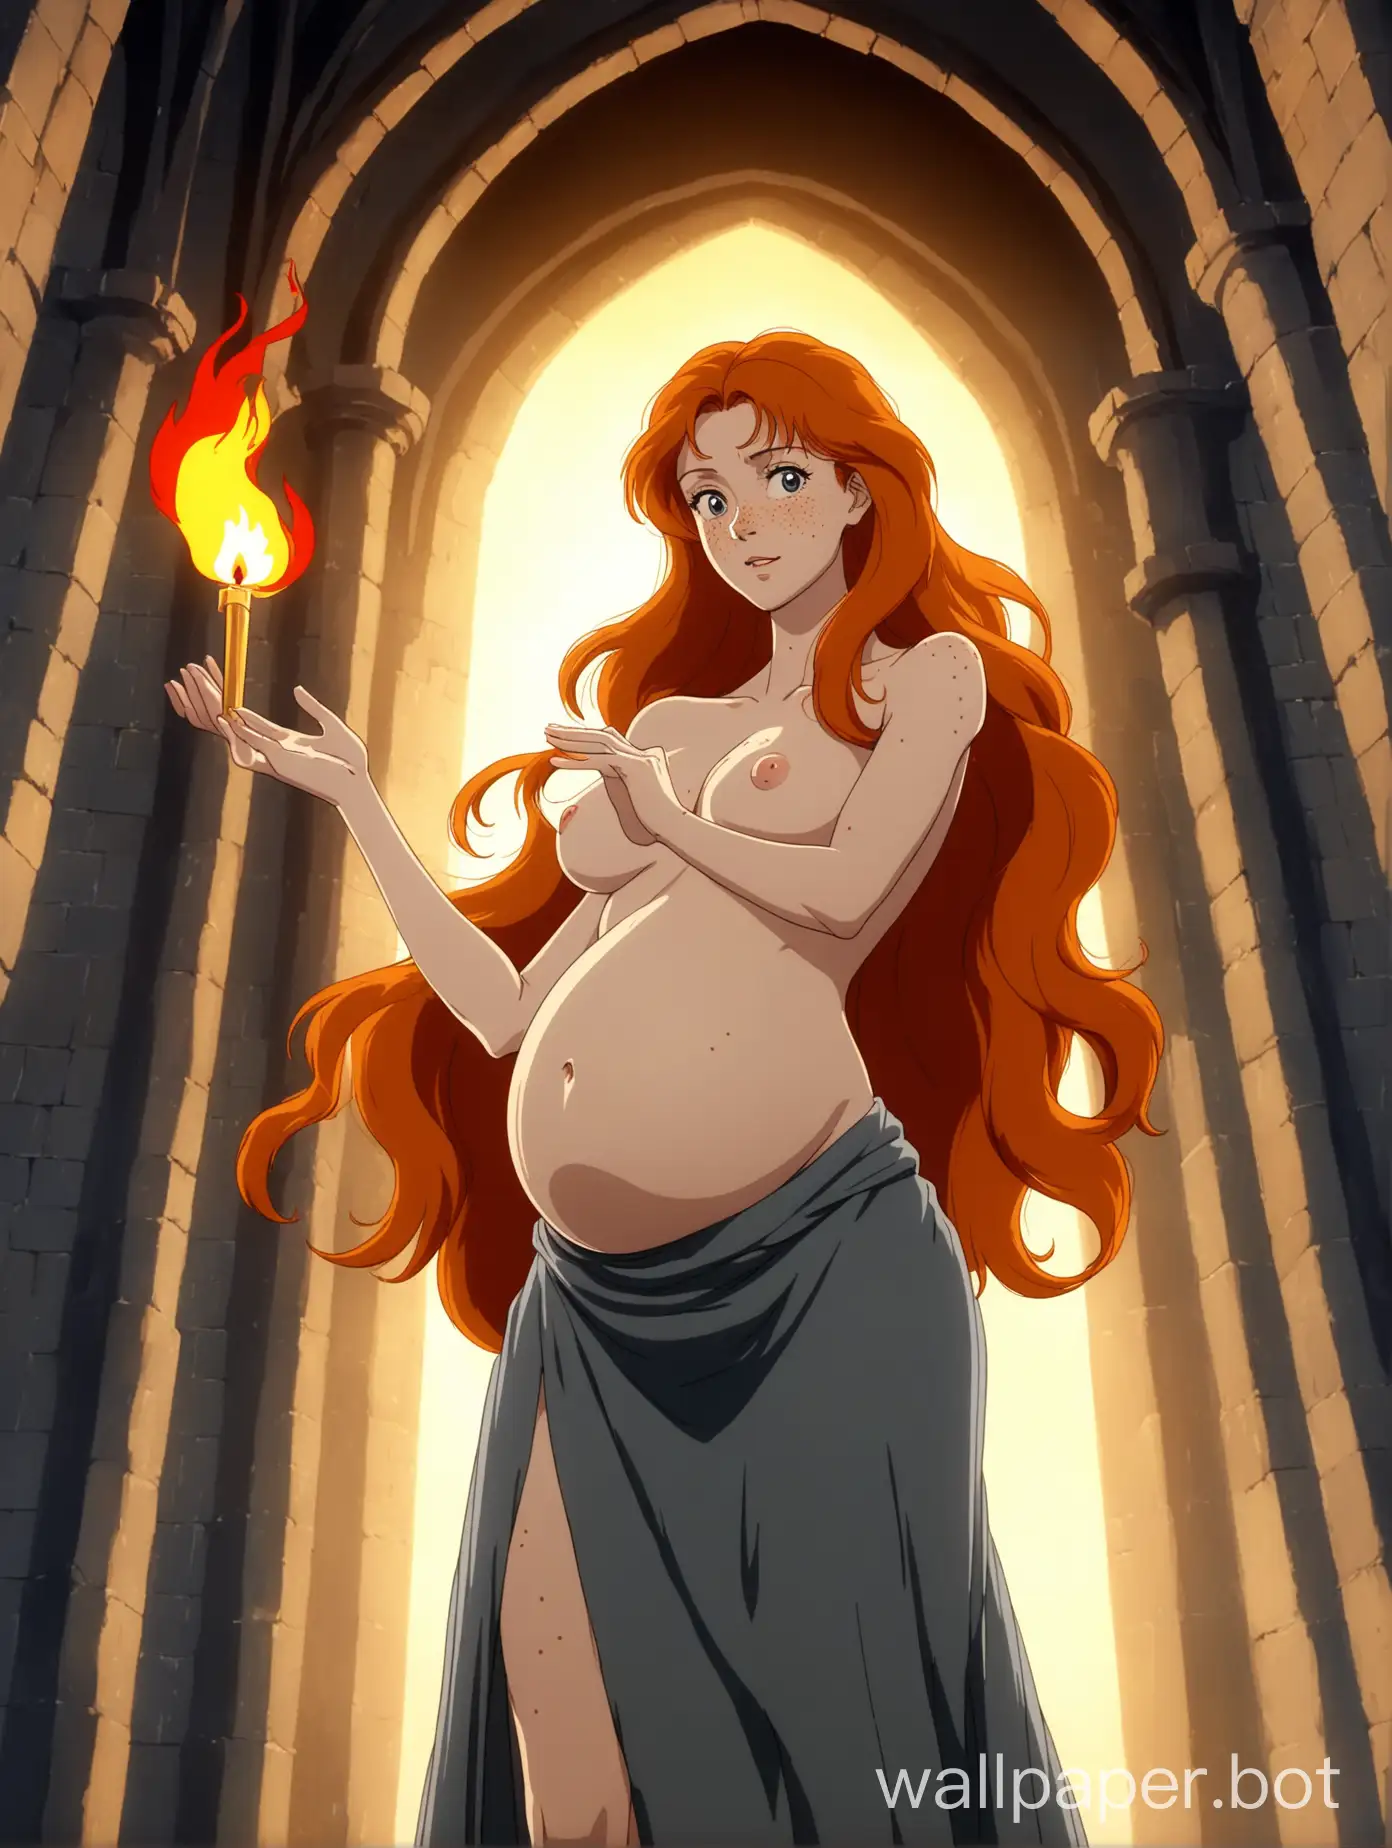 Regal-Pregnant-Woman-Holding-Flame-in-Castle-Interior-Medieval-Elegance-Portrait